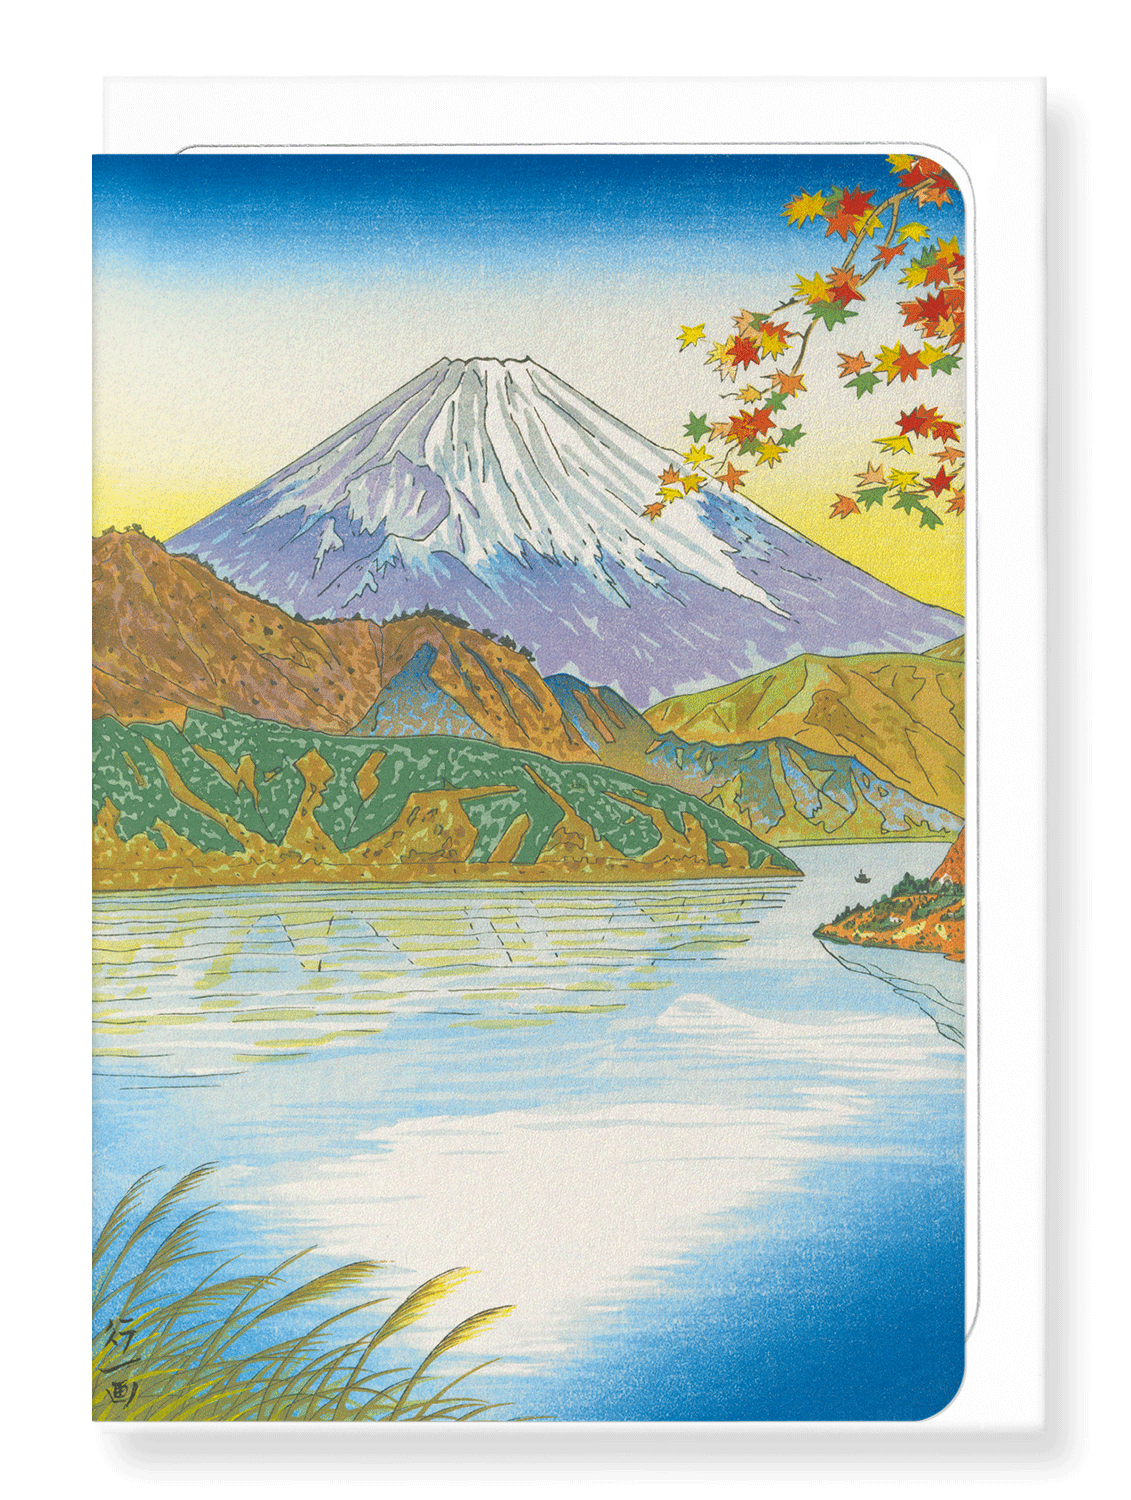 Ezen Designs - Mount fuji and lake ashi - Greeting Card - Front